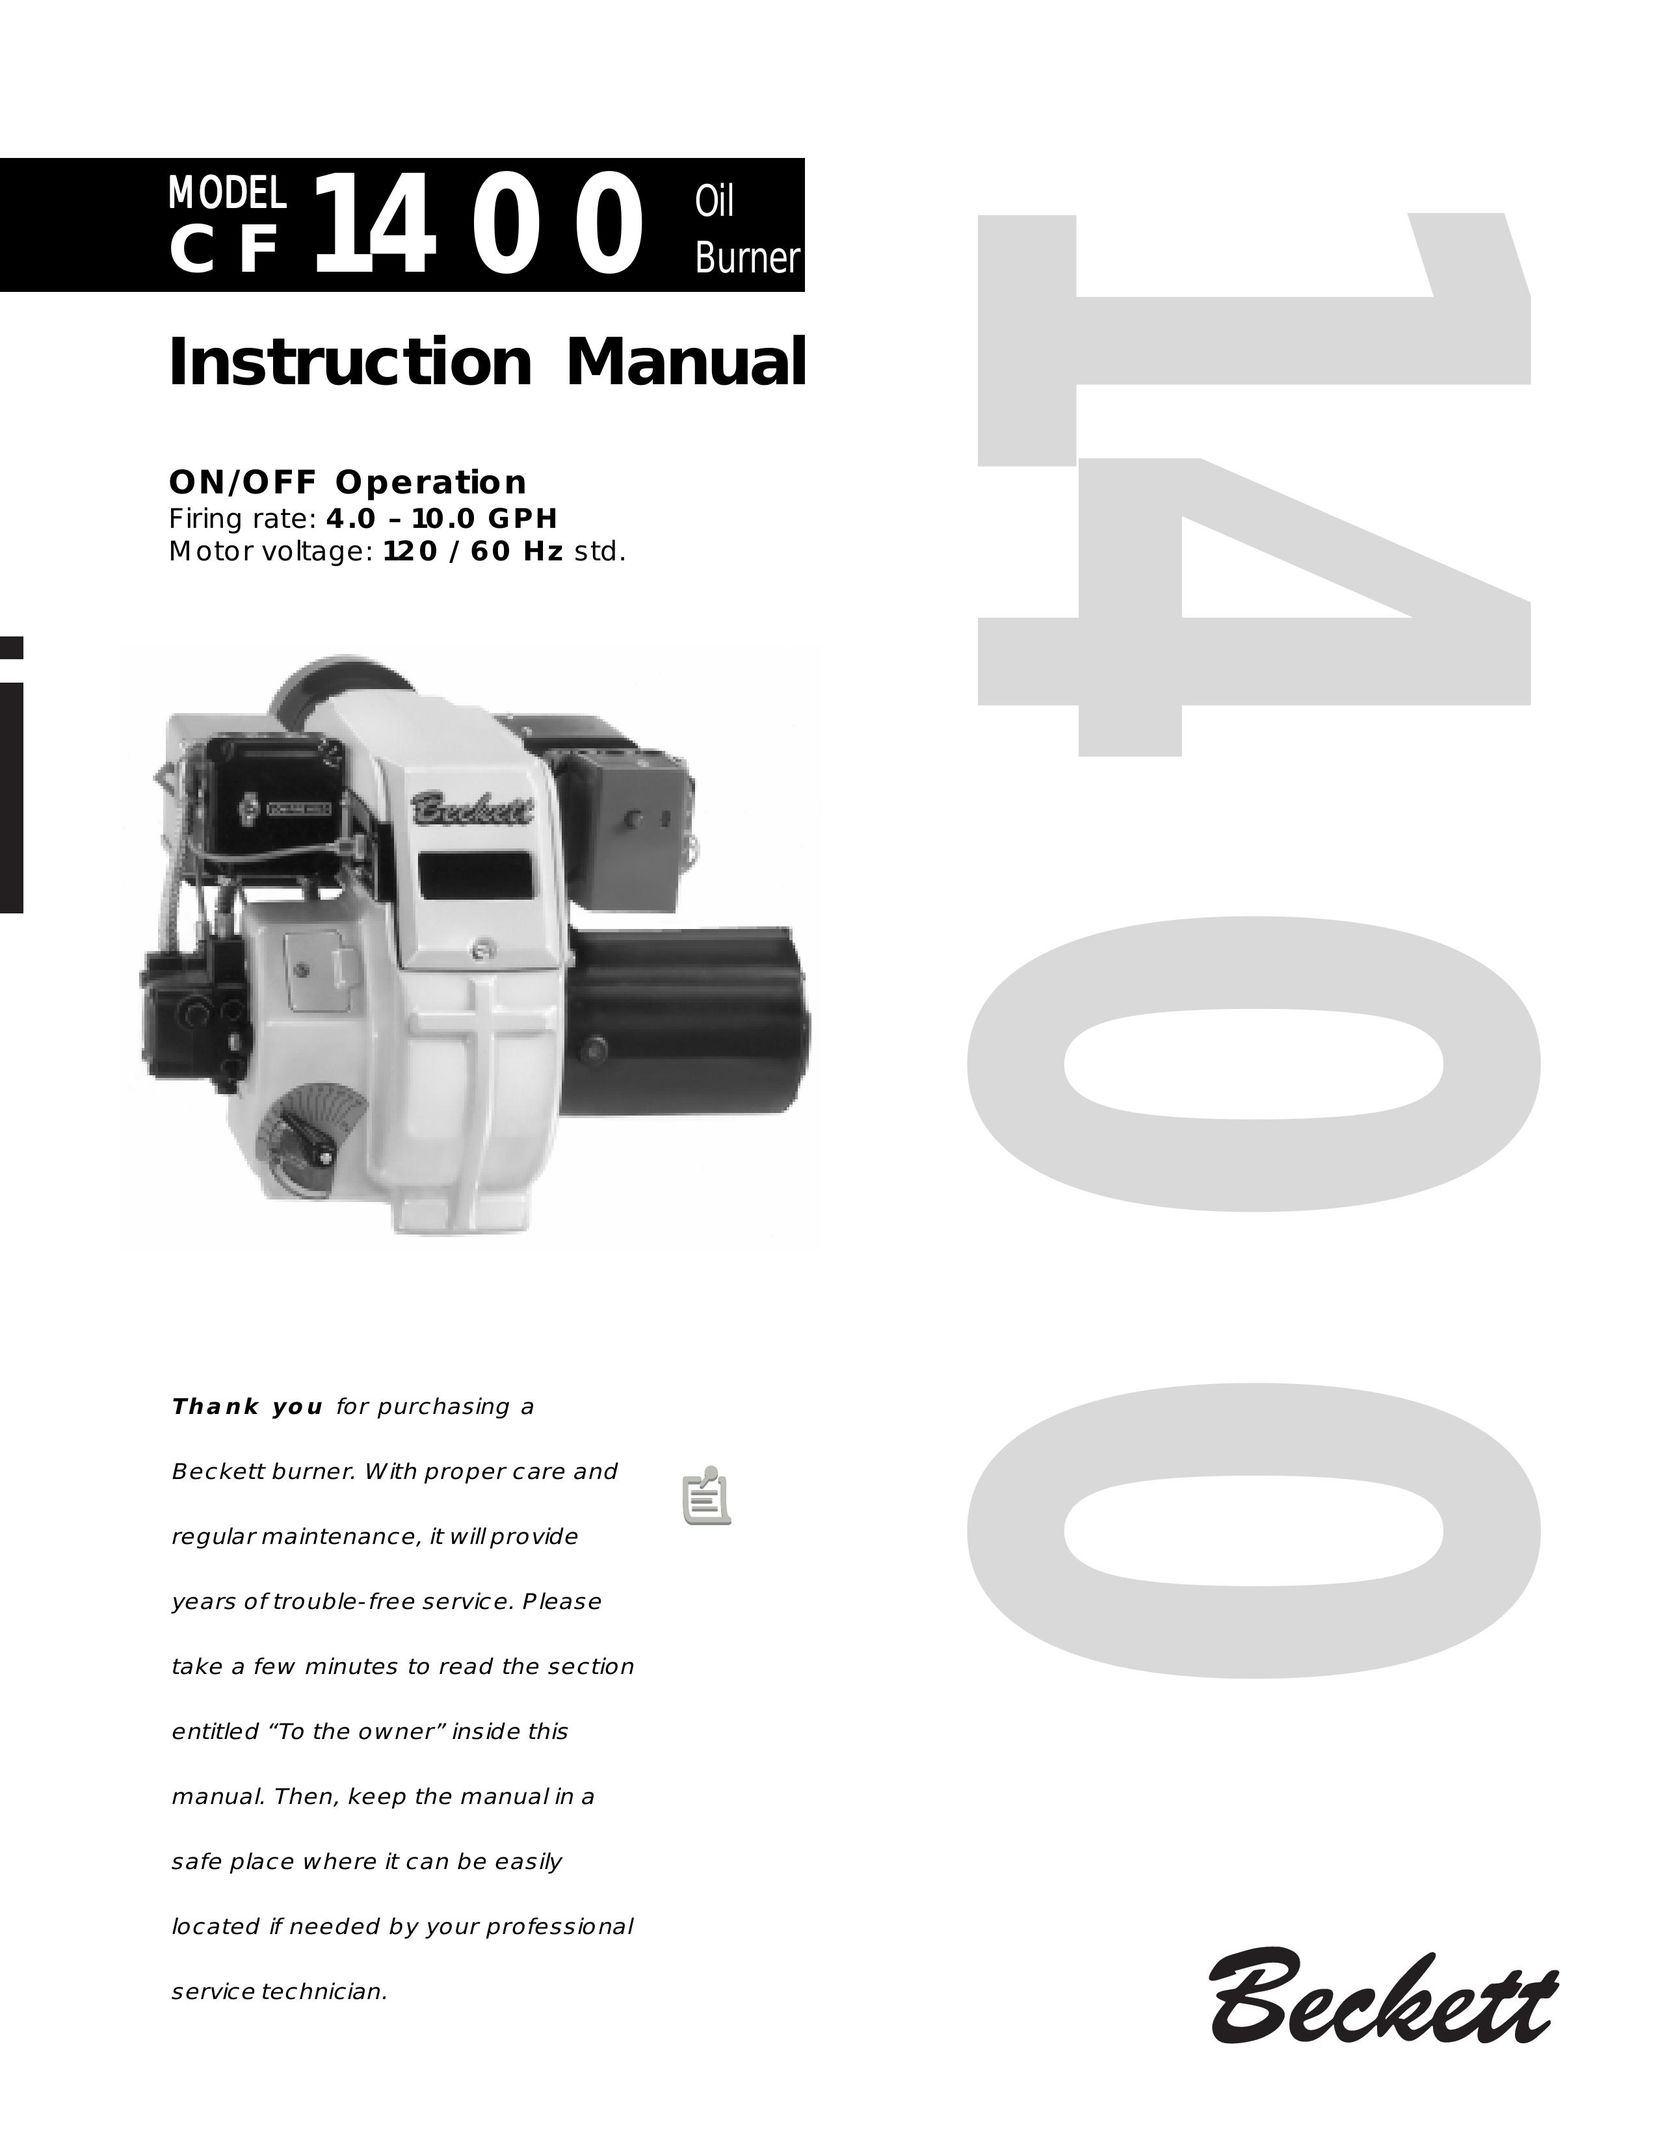 Beckett CF 1400 Burner User Manual